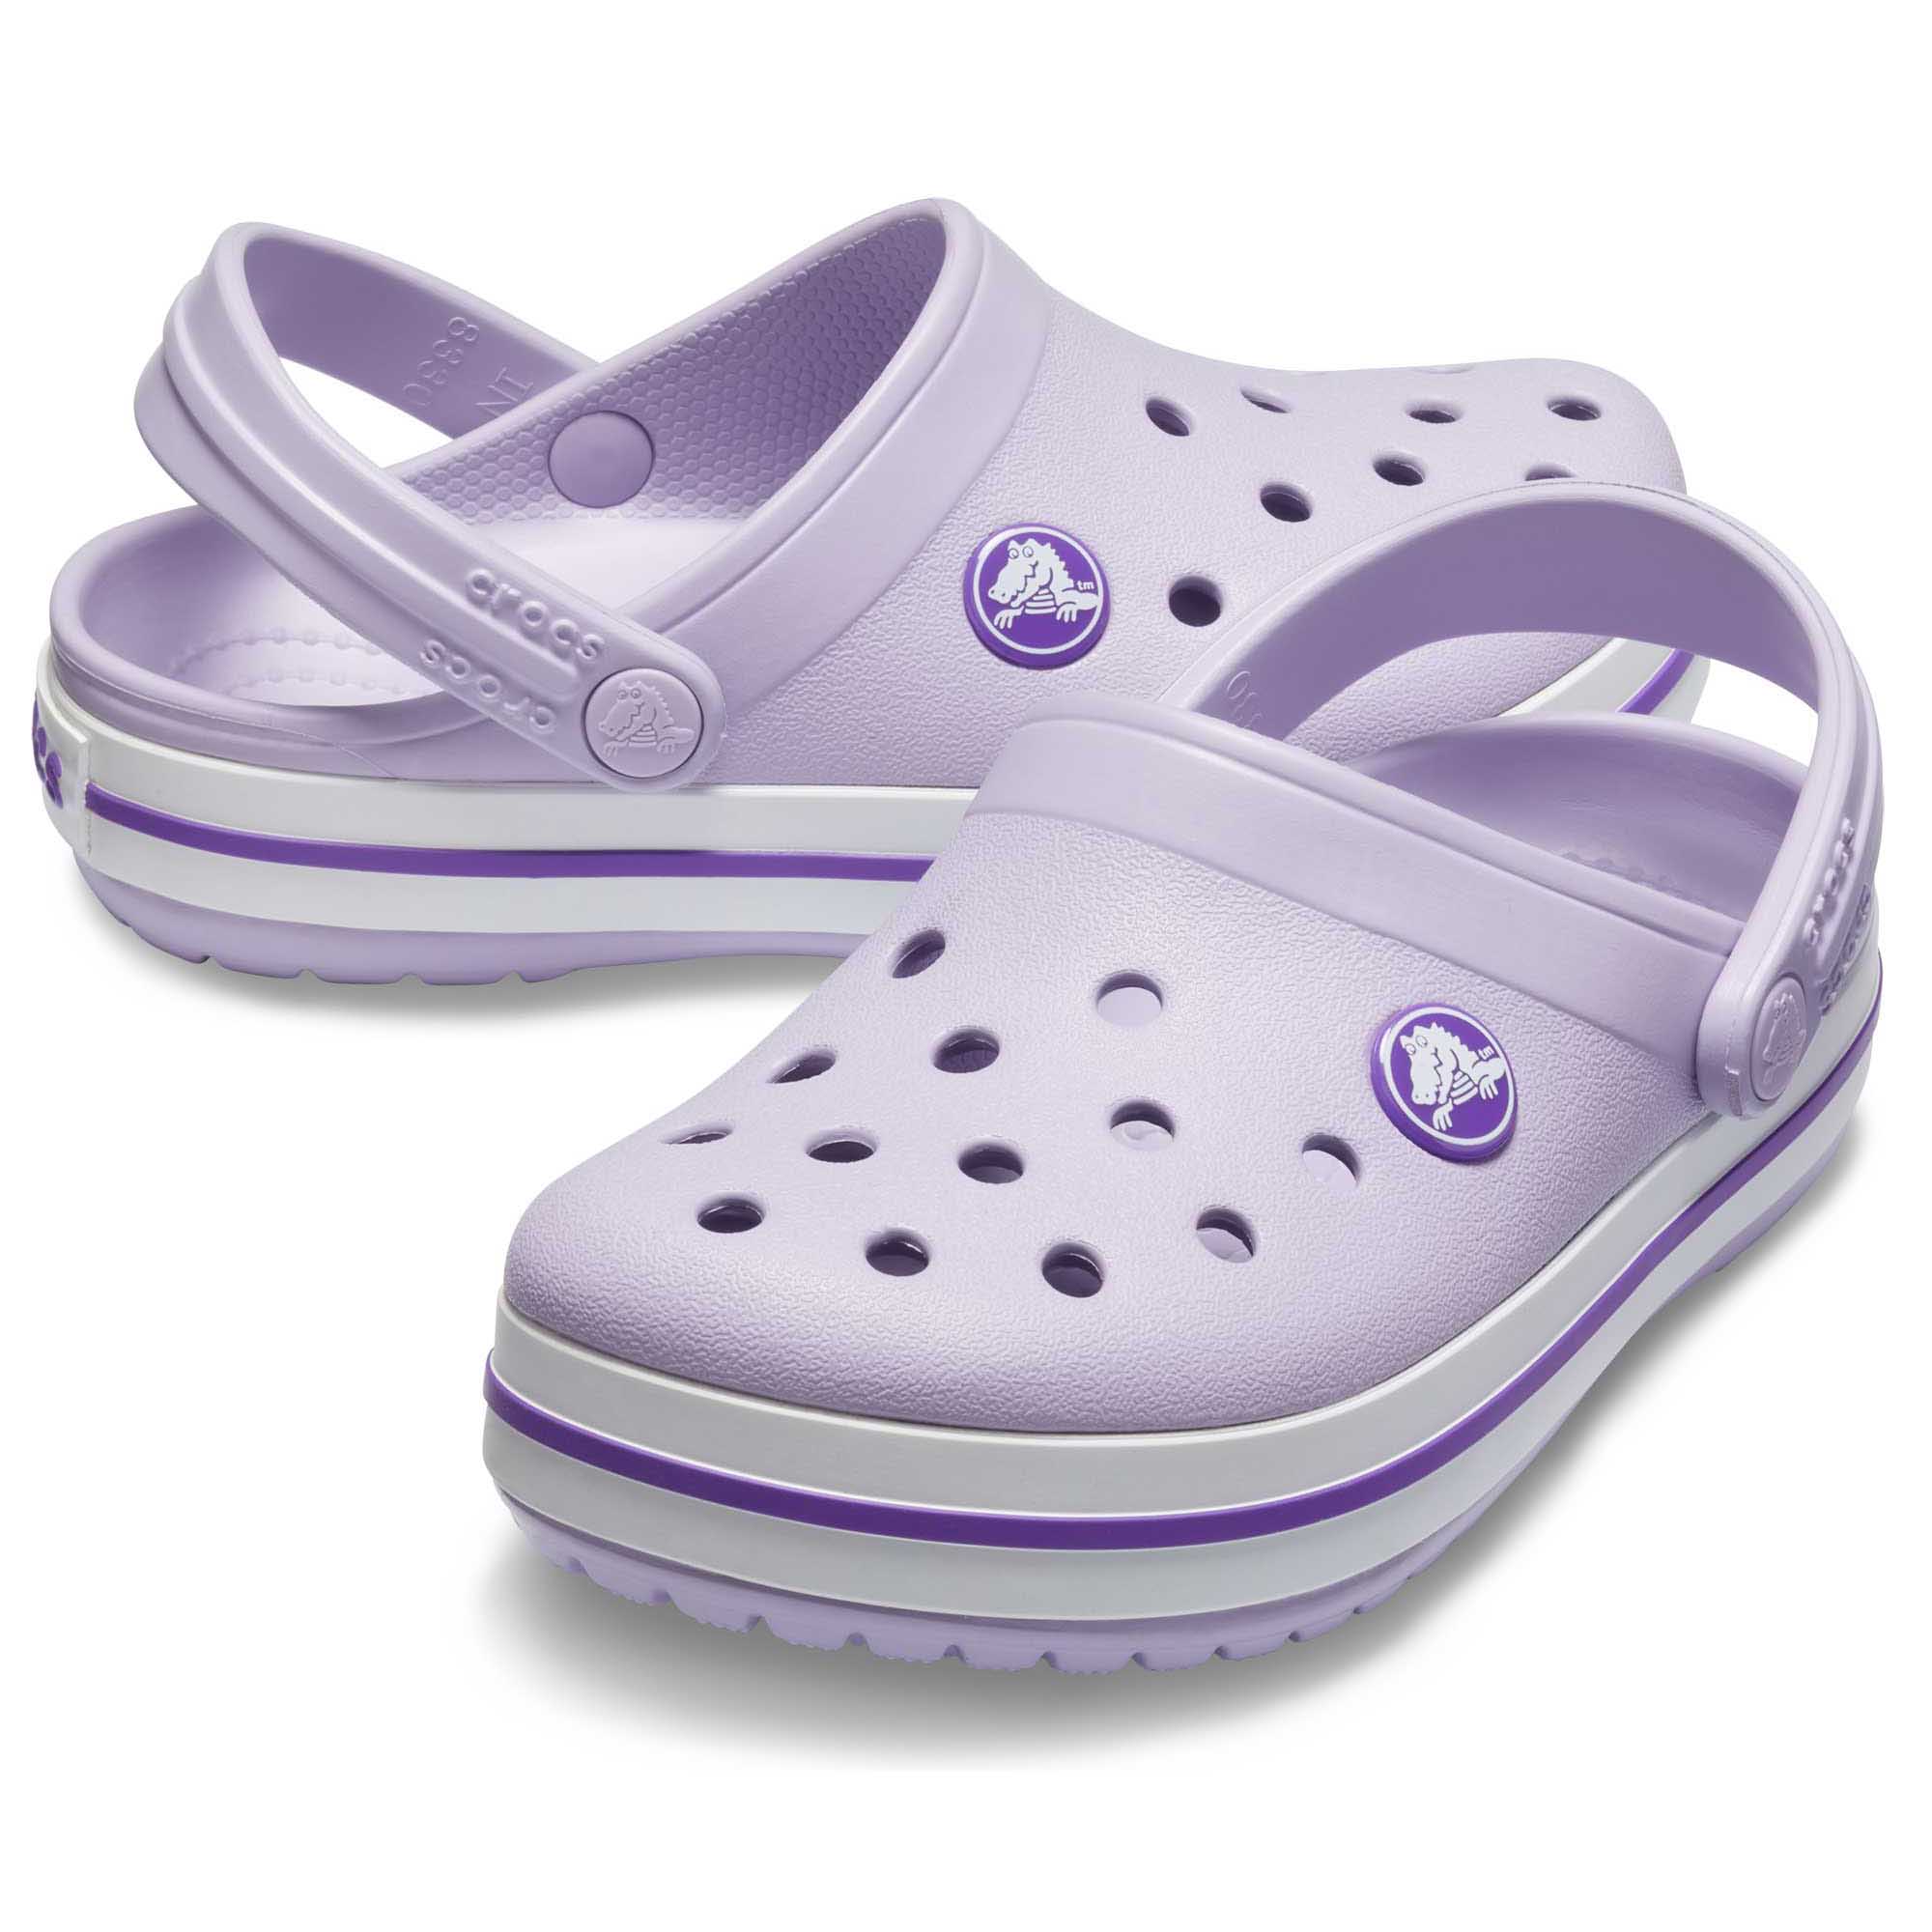 Crocband™ Clog Kids | CROCS - Crocs